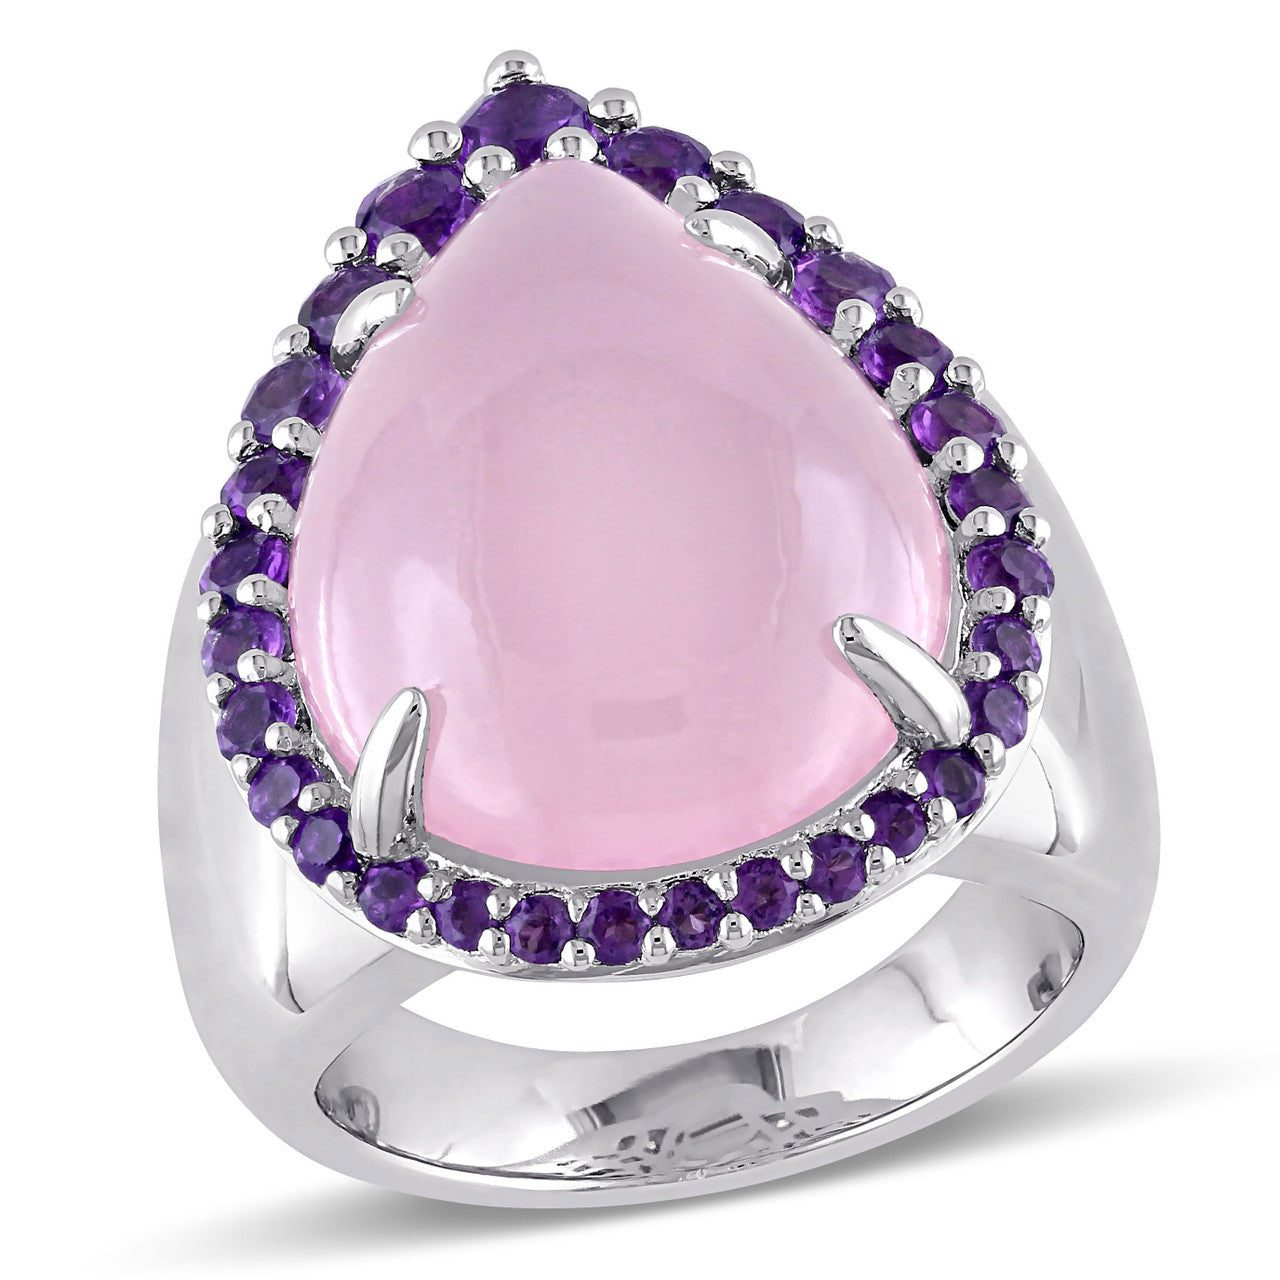 Julianna B Pink Chalcedony & Amethyst Ring in Sterling Silver - 75000002201 | Ice Jewellery Australia